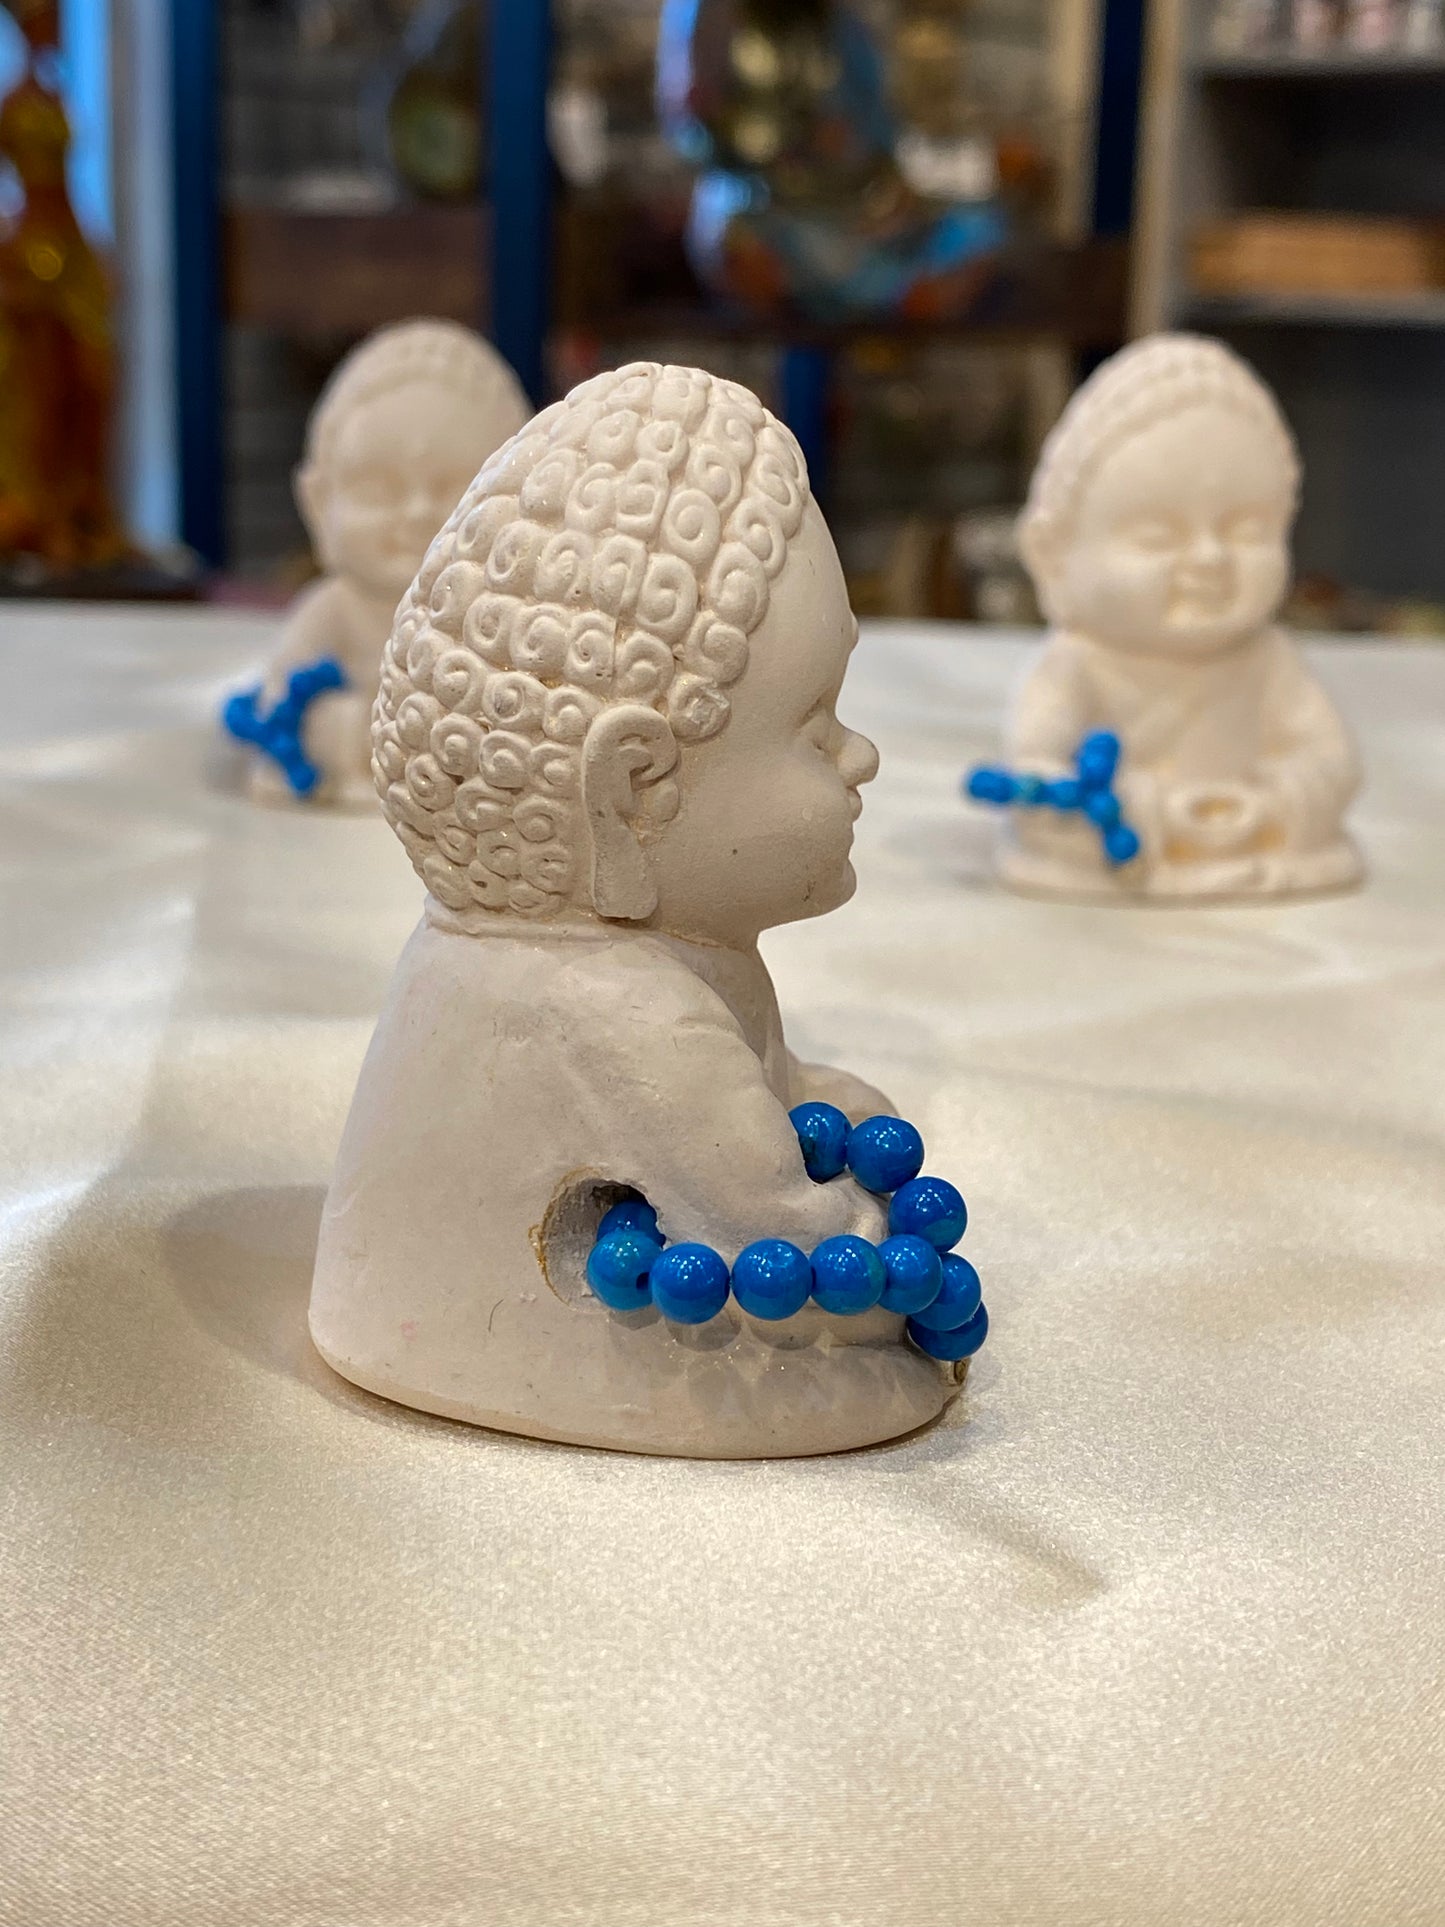 Ivory Miniature Meditation Buddha holding Bead